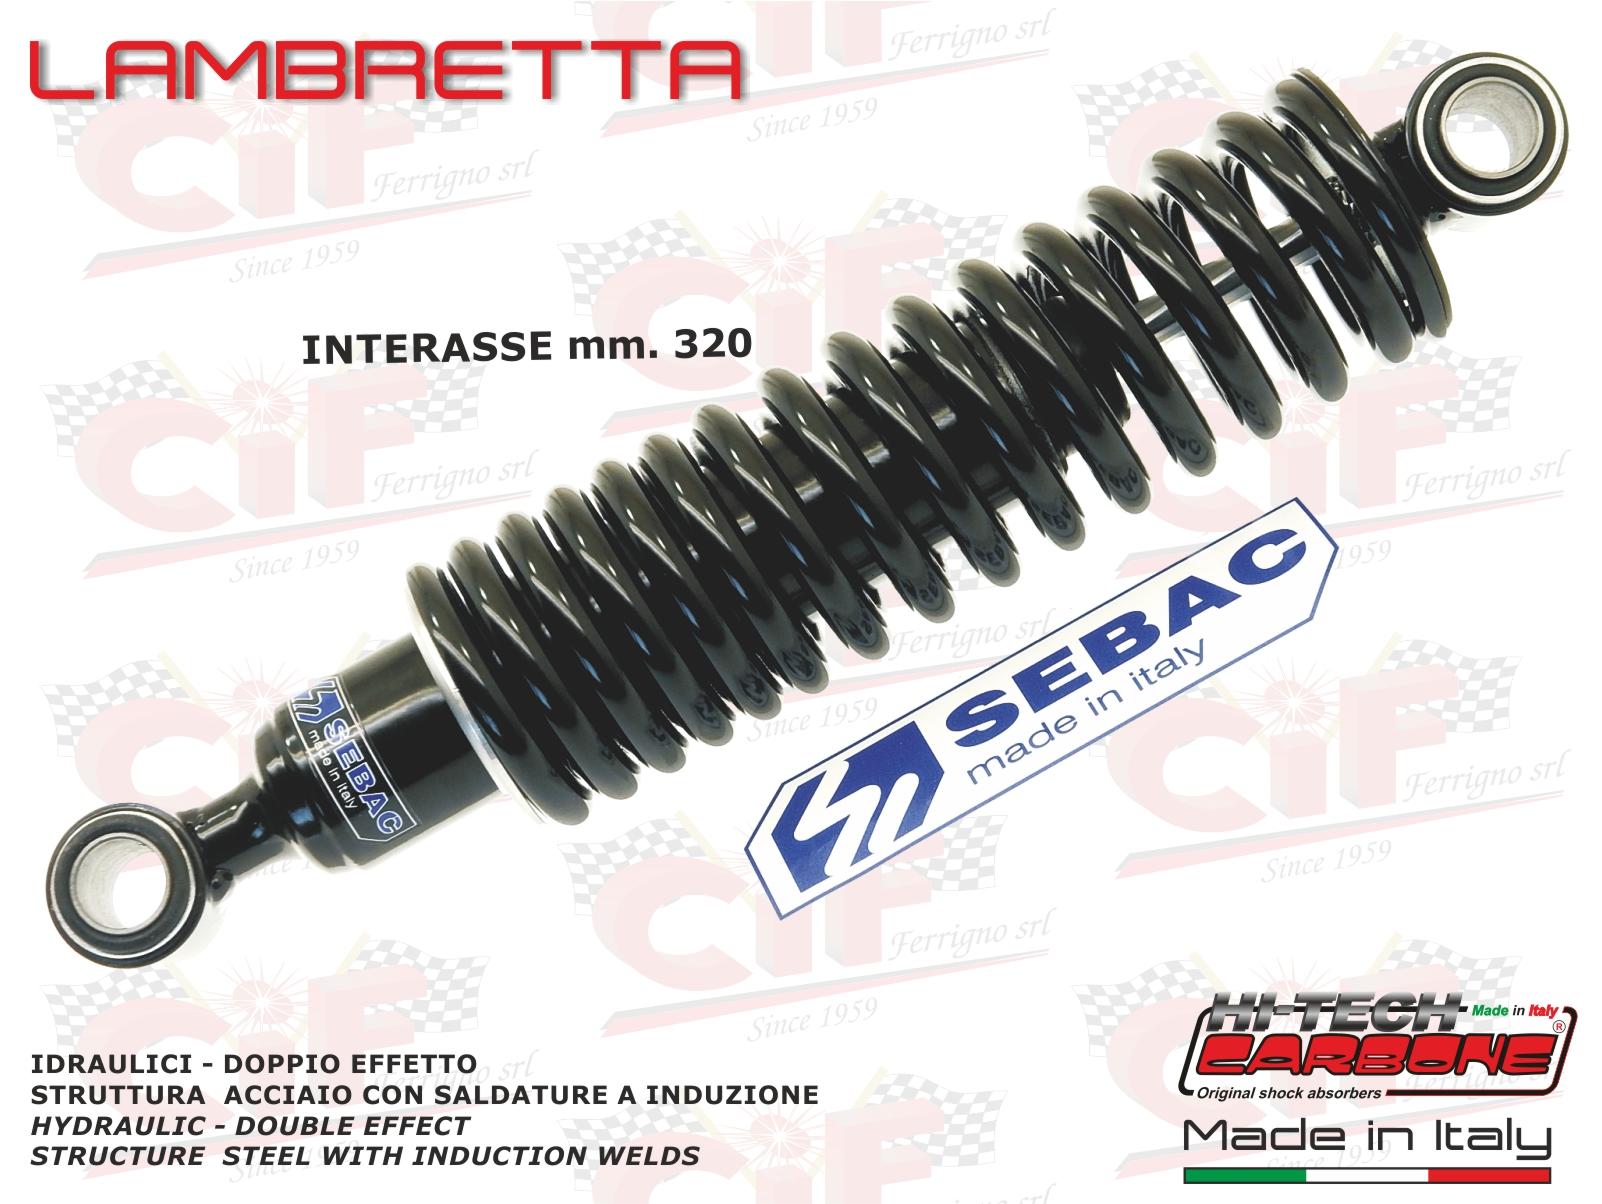 SEBAC rear shock absorber for Lambretta LI 2nd SERIES